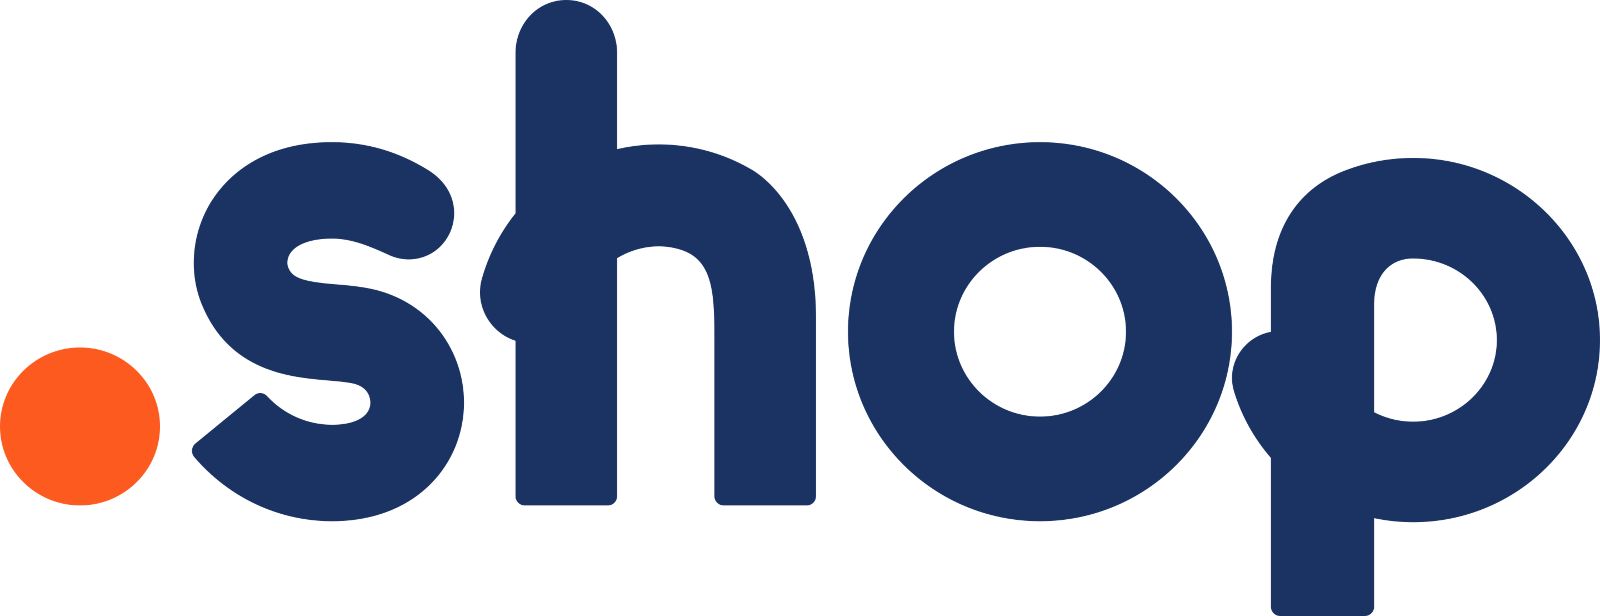 domain .shop logo